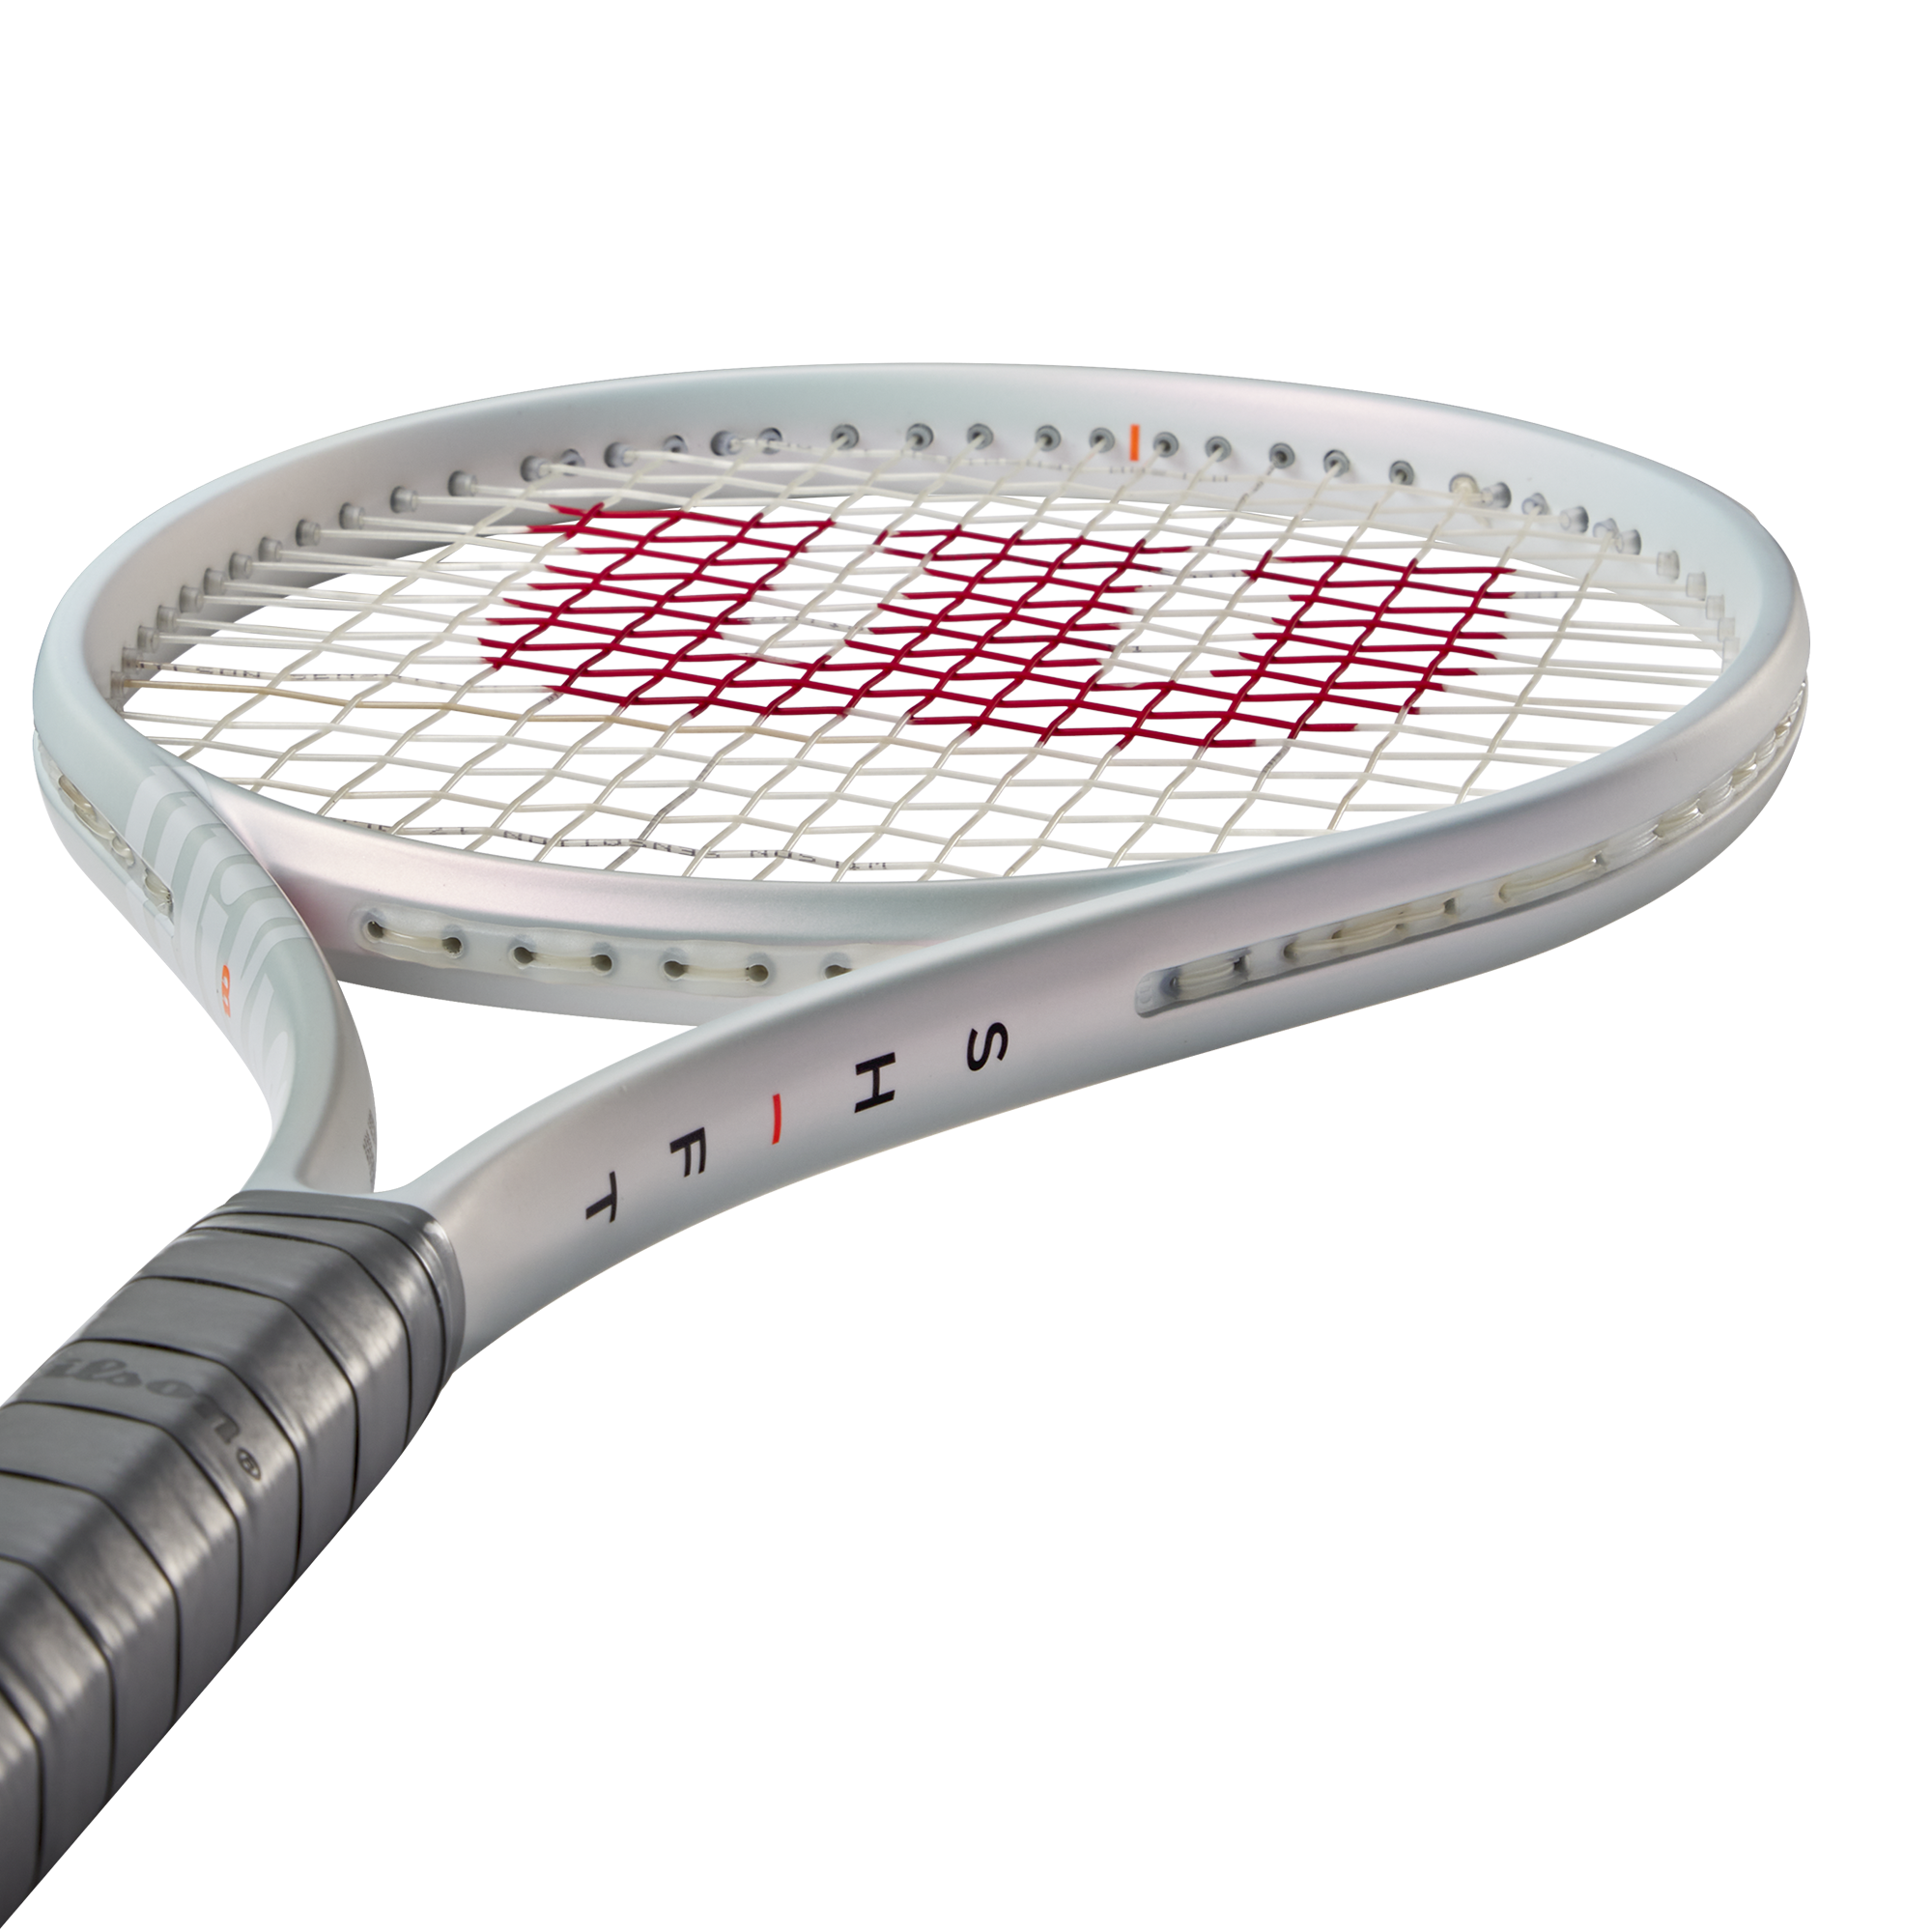 Tennis, Badminton, Squash Racquets Store in Toronto, Canada – ATR Sports